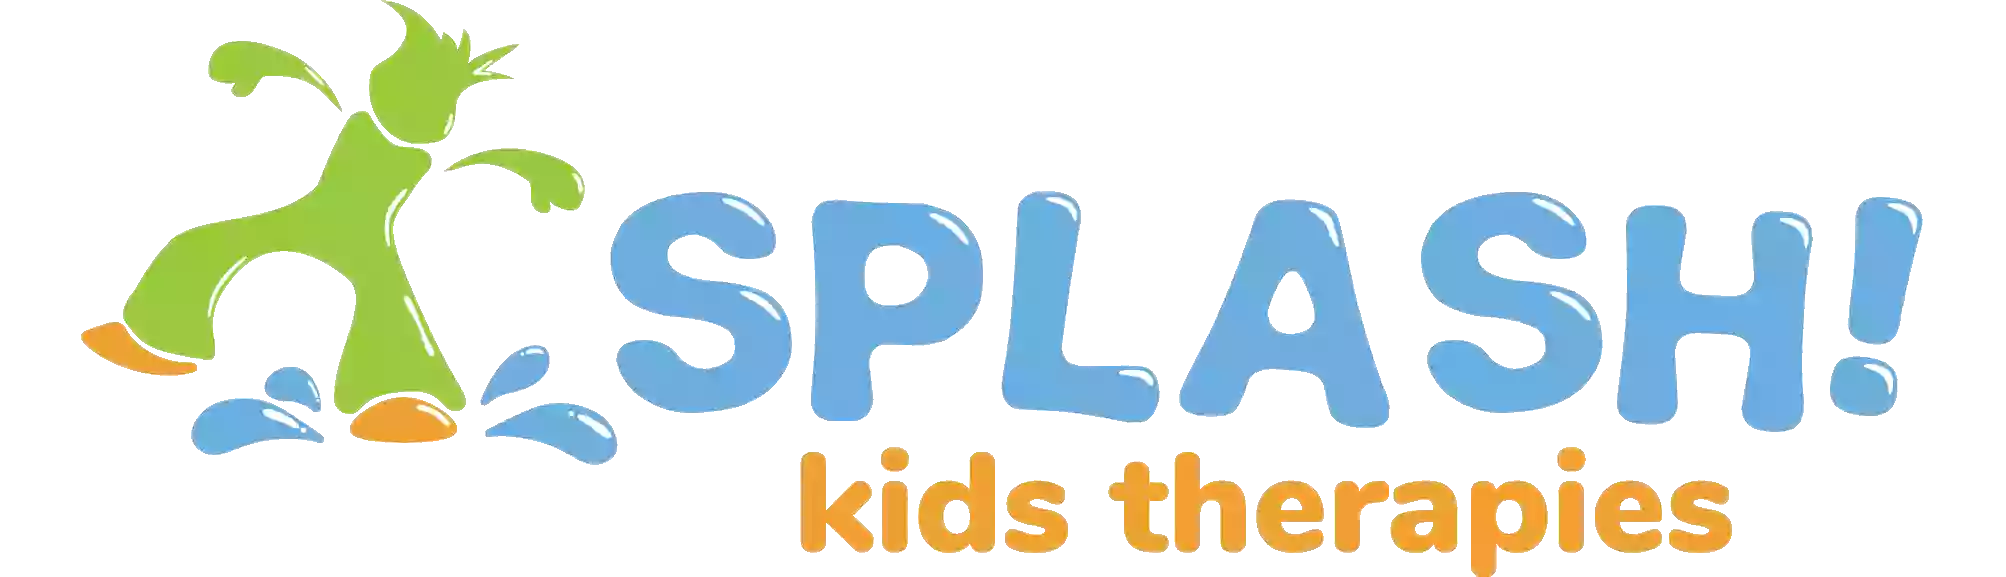 Splash Kids Therapies